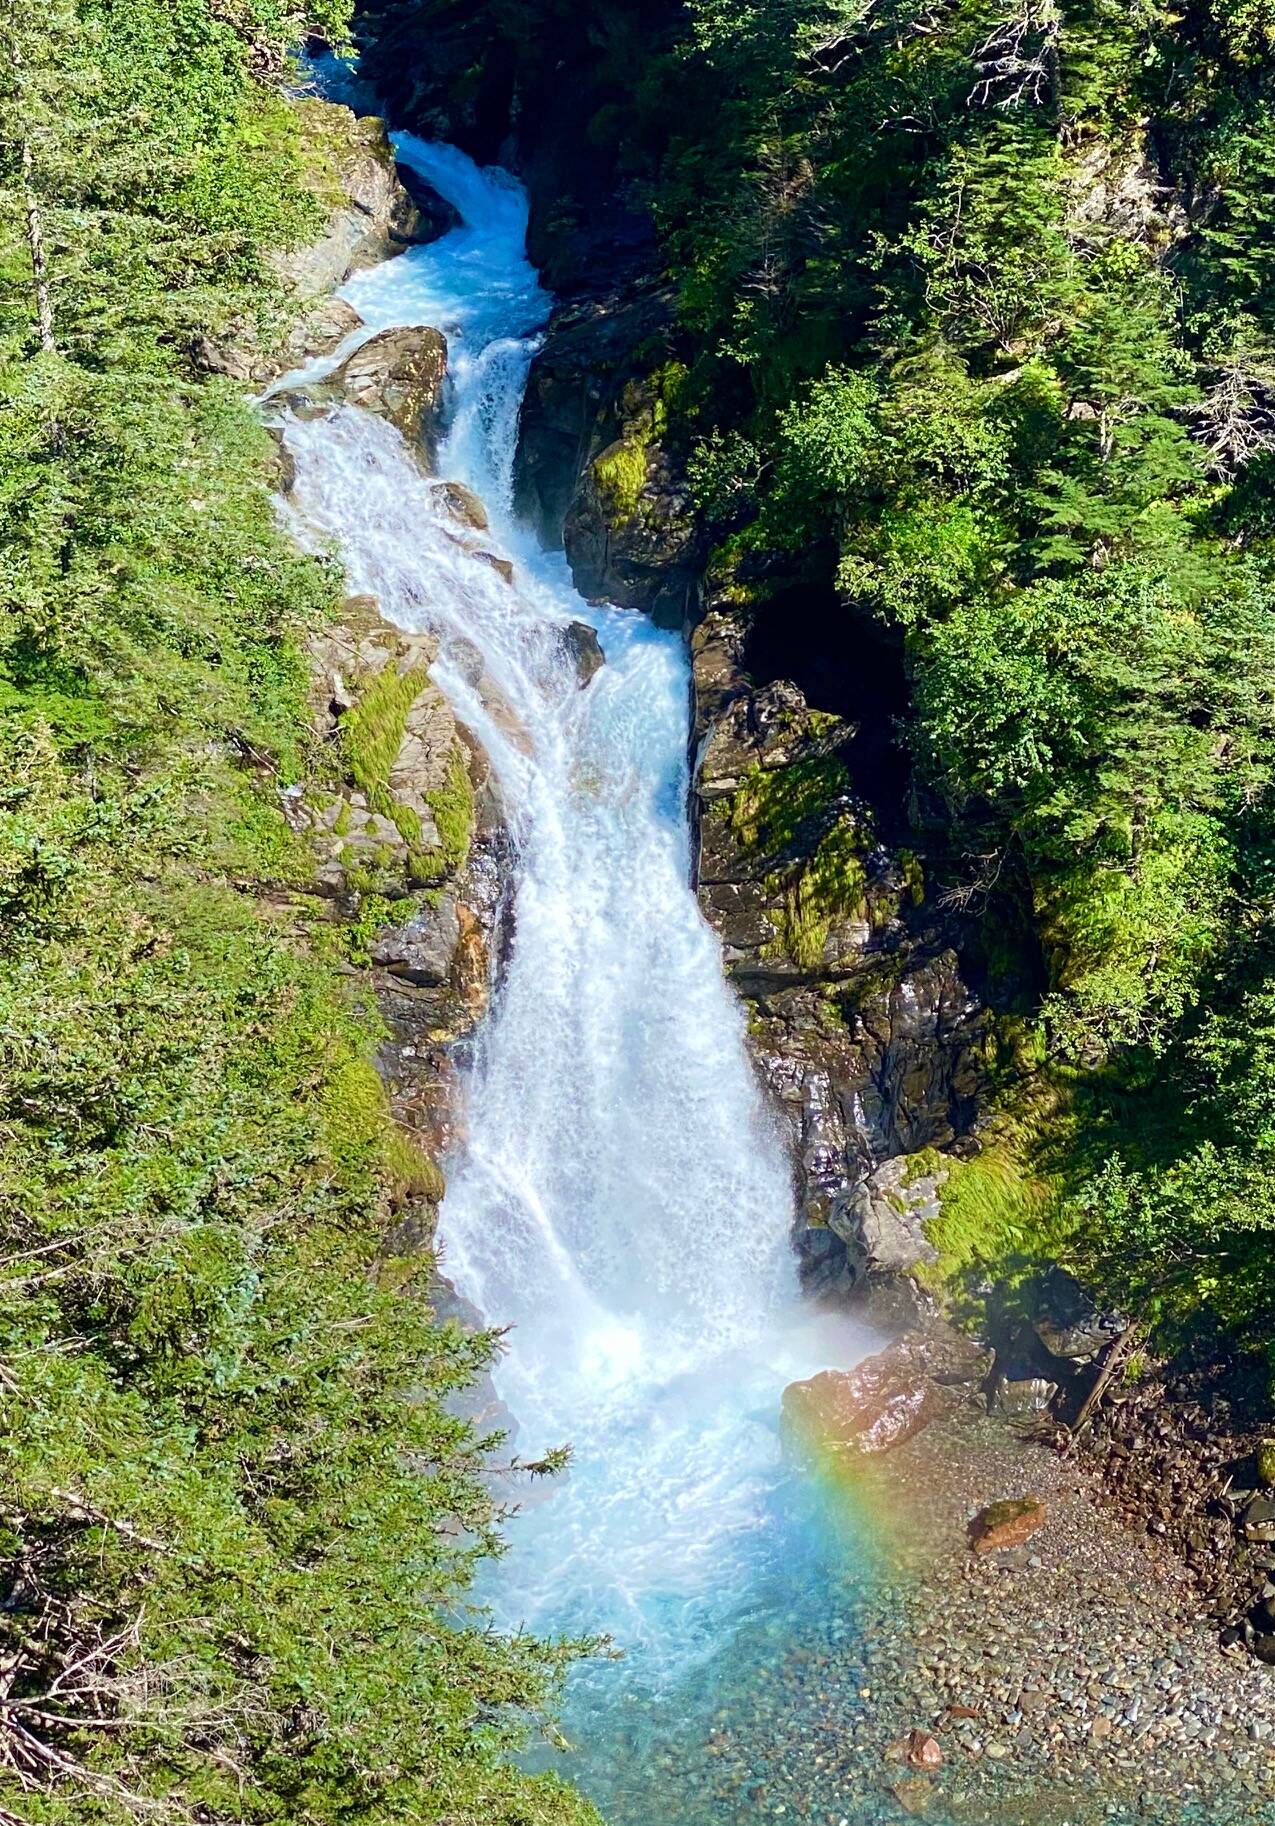 Ebner Falls creates a rainbow as Gold Creek cascades down to rocks below. (Courtesy Photo / Denise Carroll)